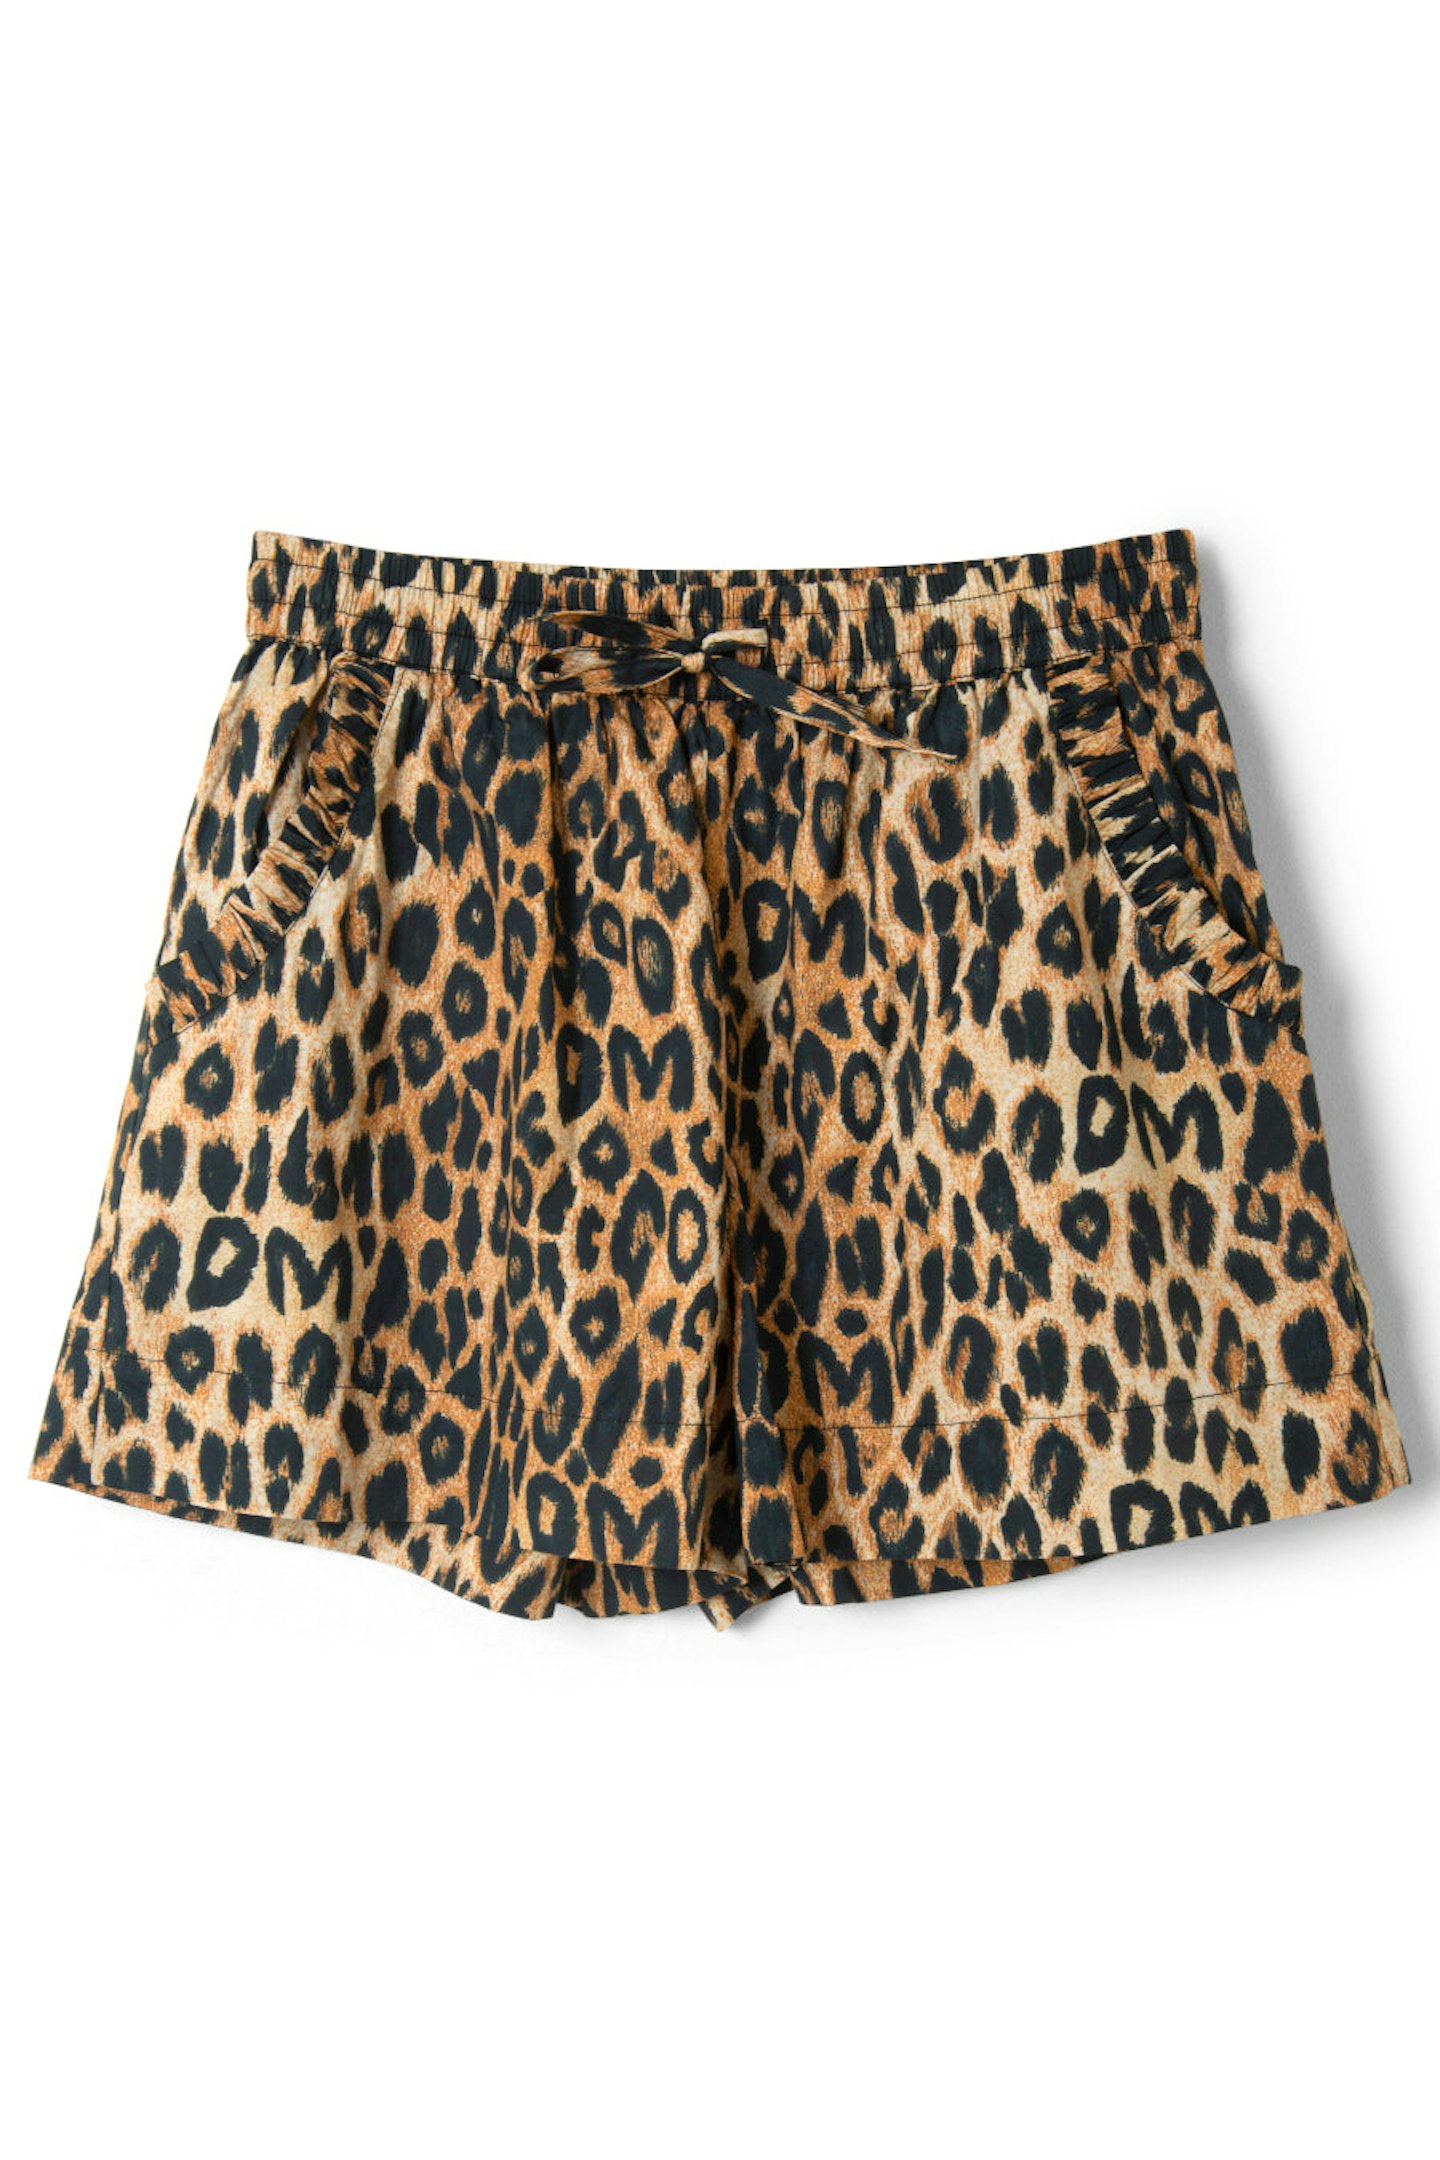 Damson Madder, Leopard Pull-On Shorts